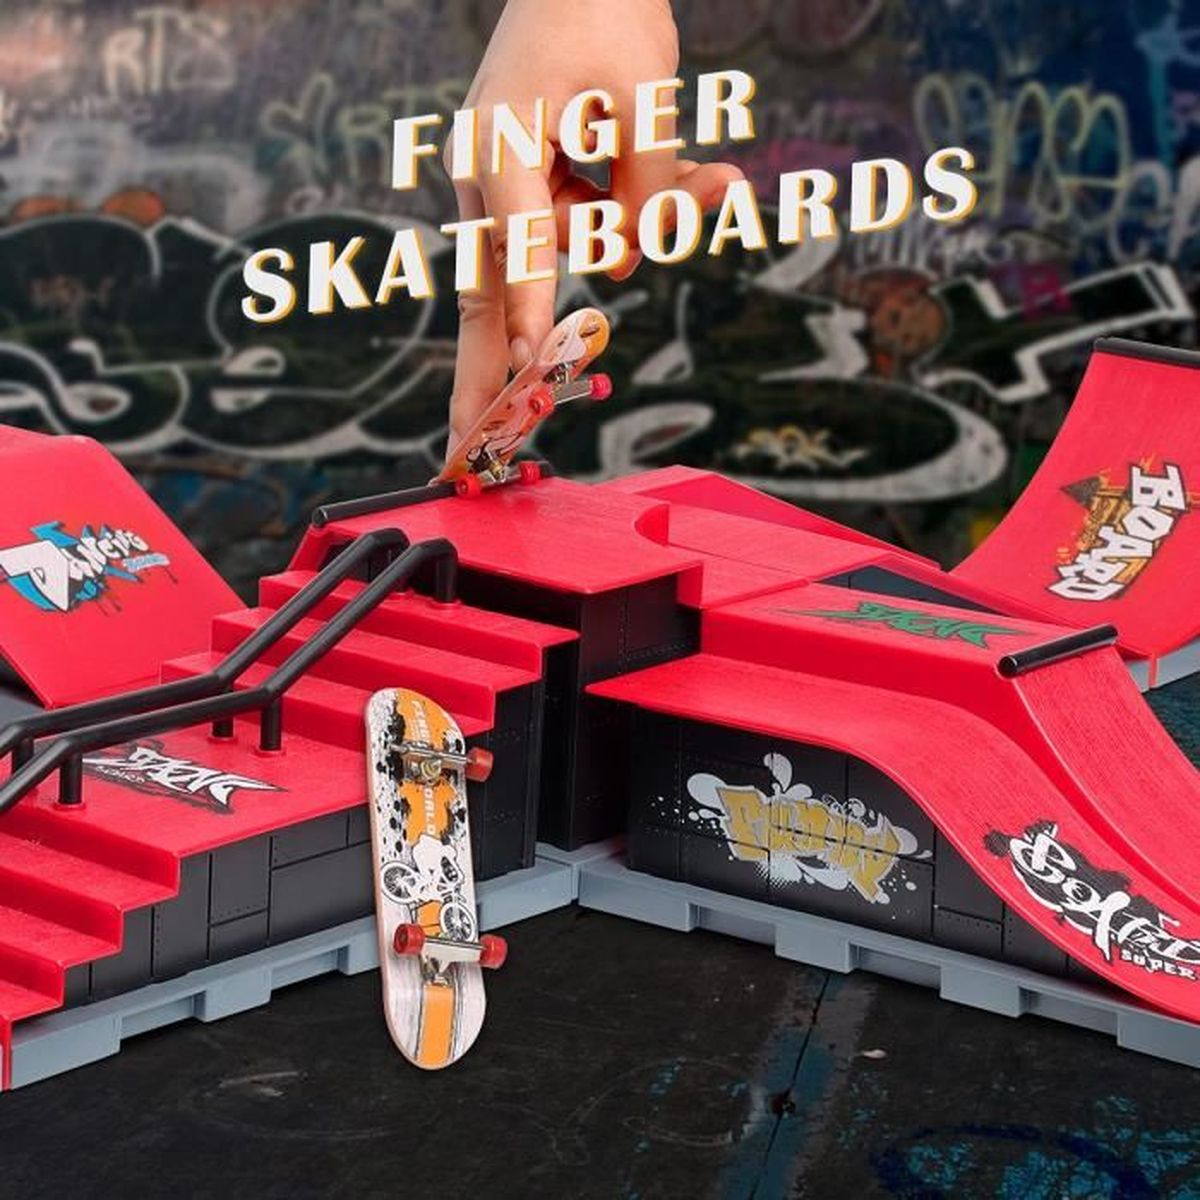 E Aolieh Finger Skateboard et Rampe Accessoires Set de Fingerboard Skate Park Jouets Set DIY Finger Skate Board Ultimate Sport Training Requisiten Jouets pour Enfants 